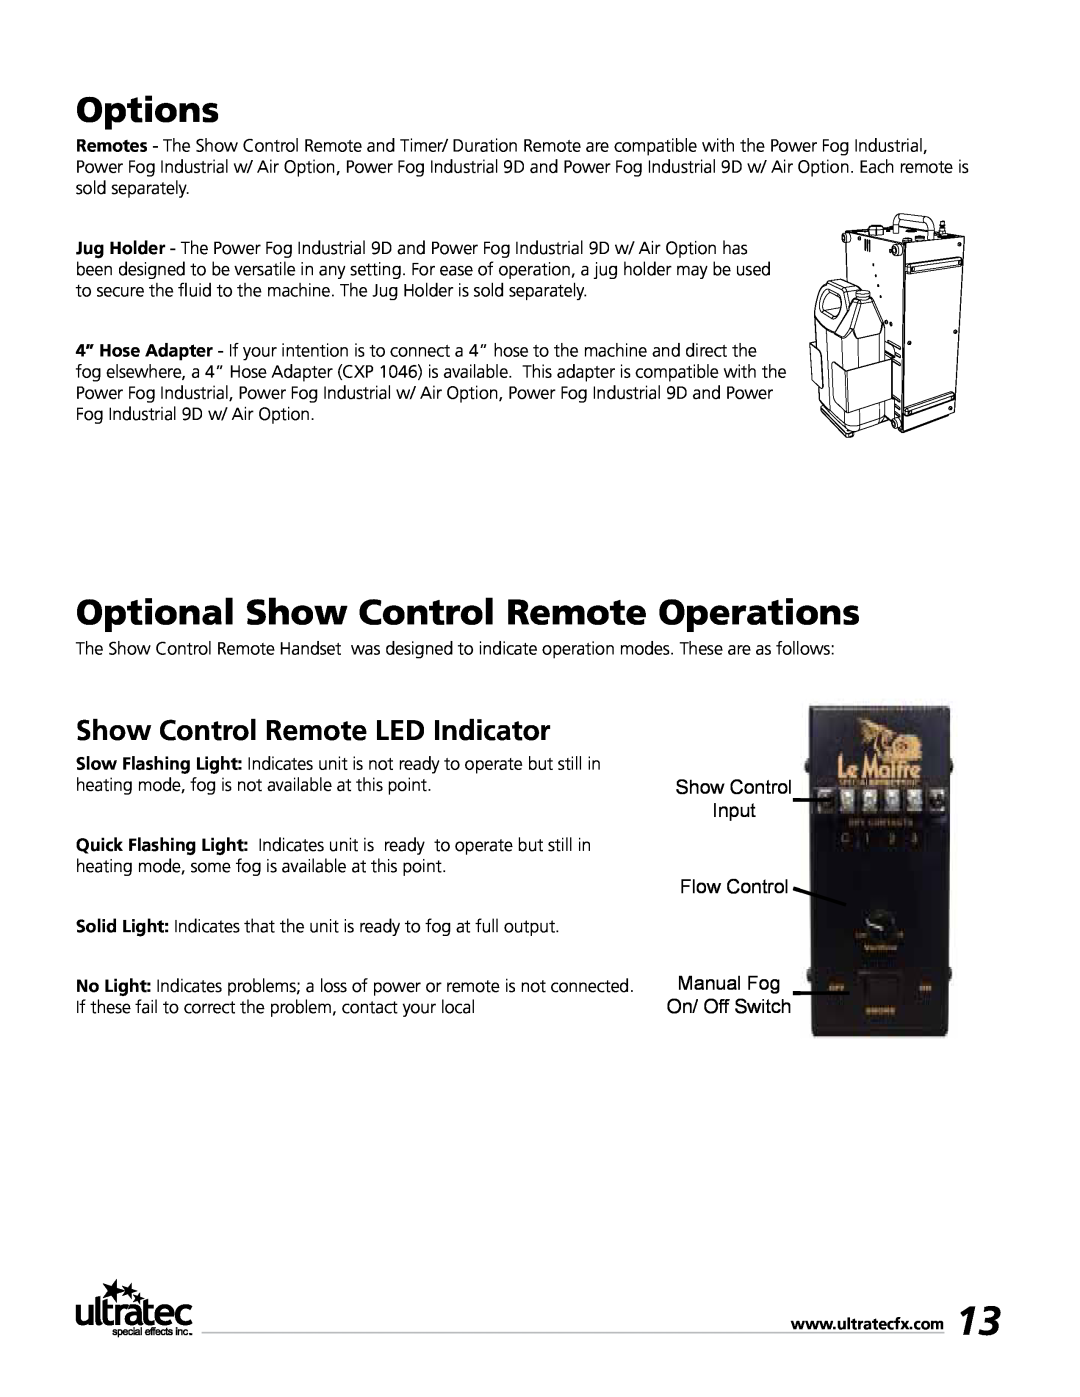 Ultratec PFI Options, Optional Show Control Remote Operations, Show Control Remote LED Indicator, Input, Flow Control 